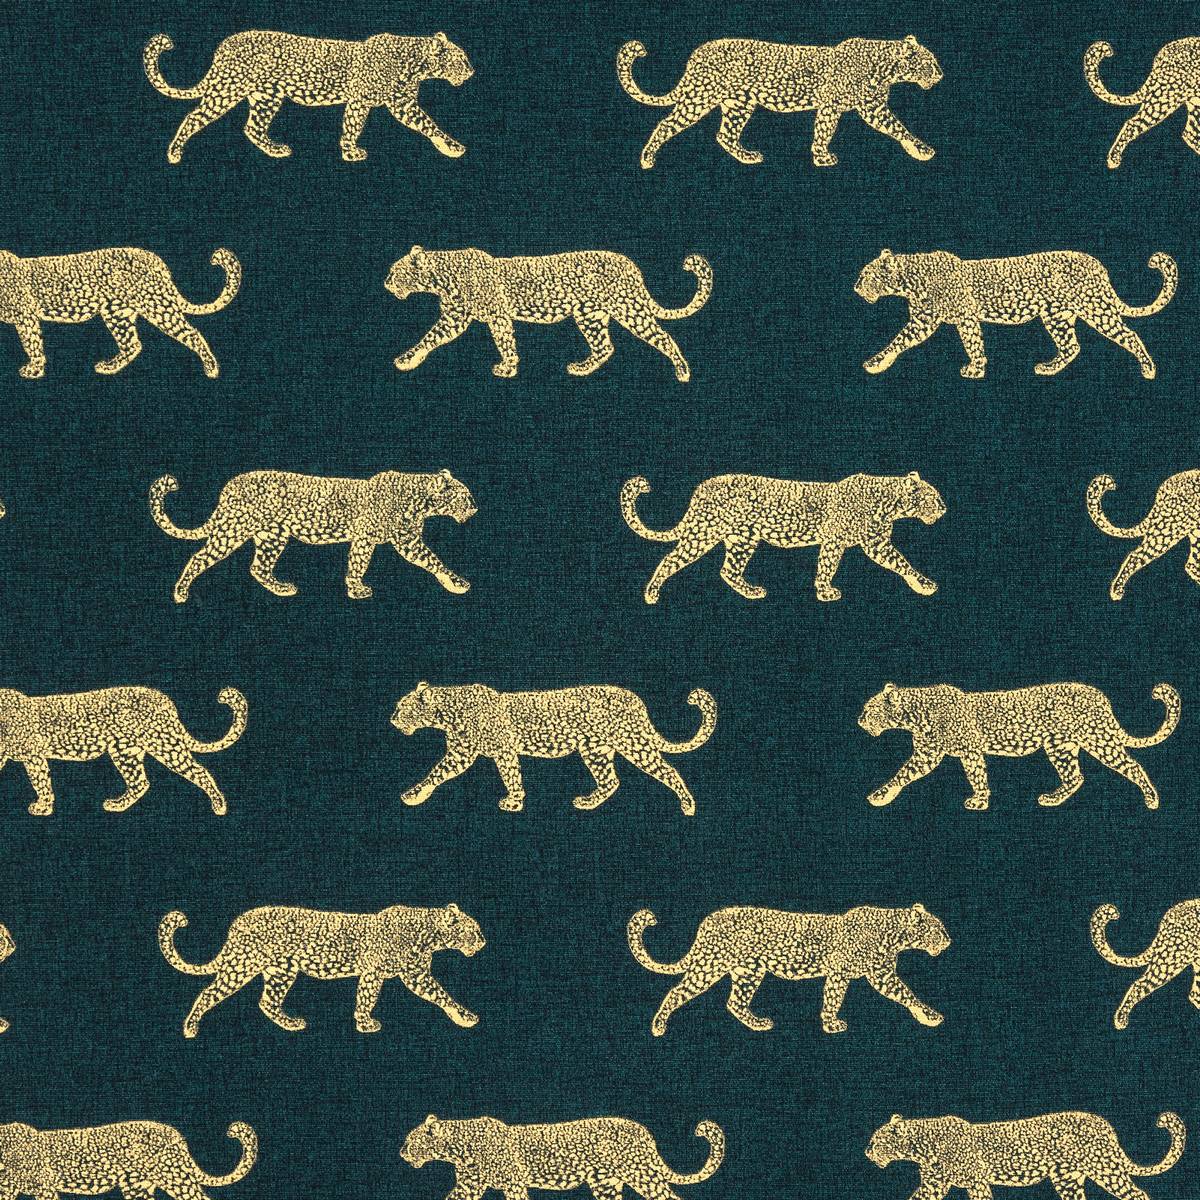 Leopard Panama Teal Fabric by Fryetts